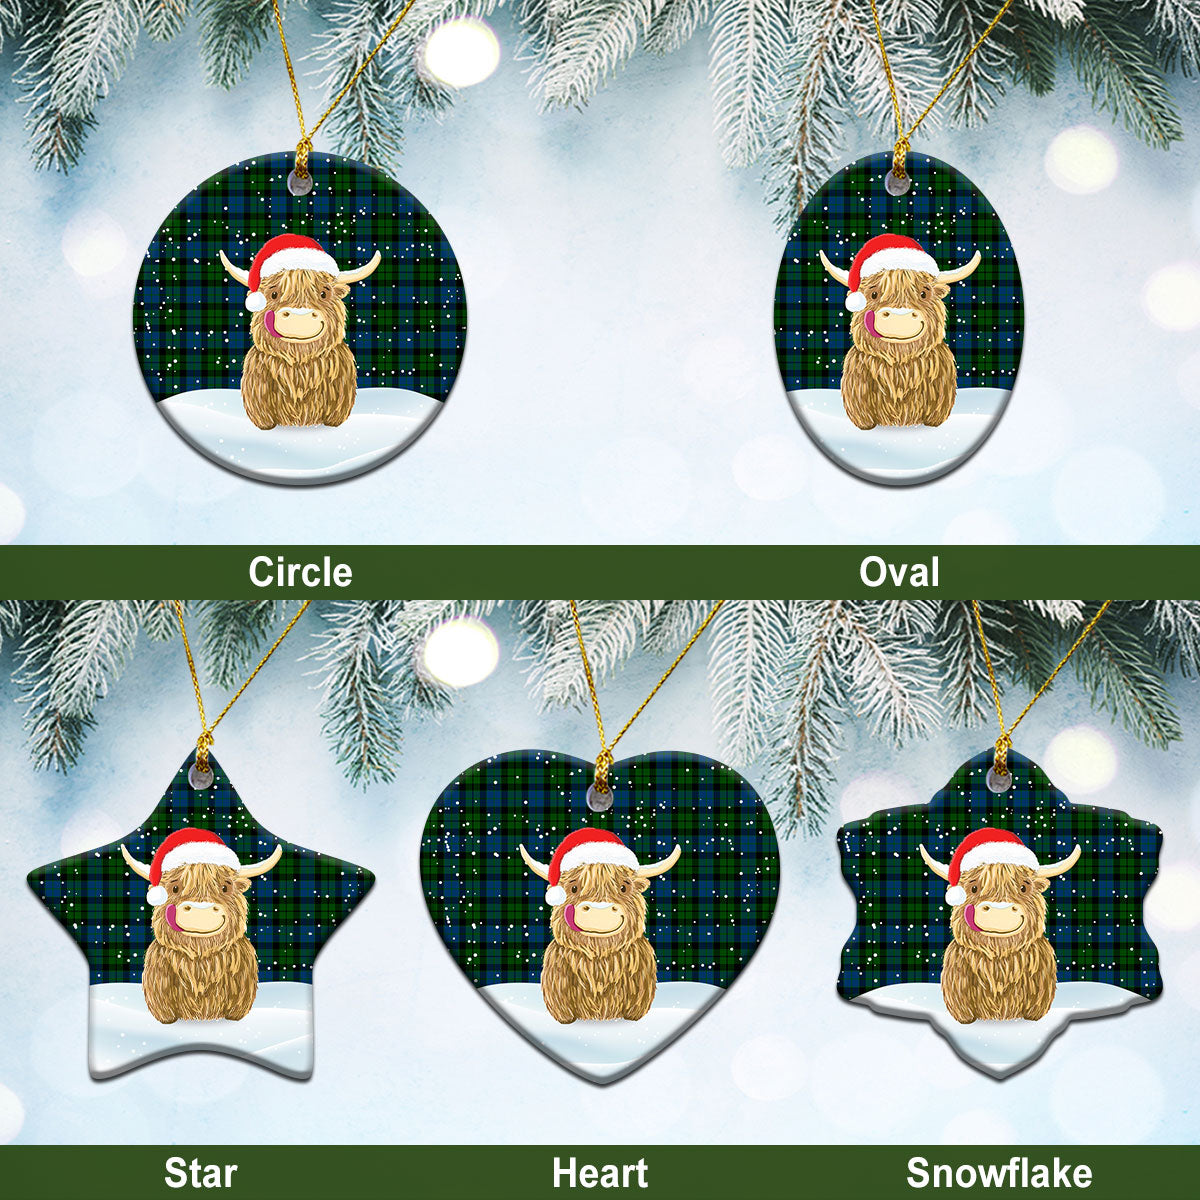 MacKie Tartan Christmas Ceramic Ornament - Highland Cows Style